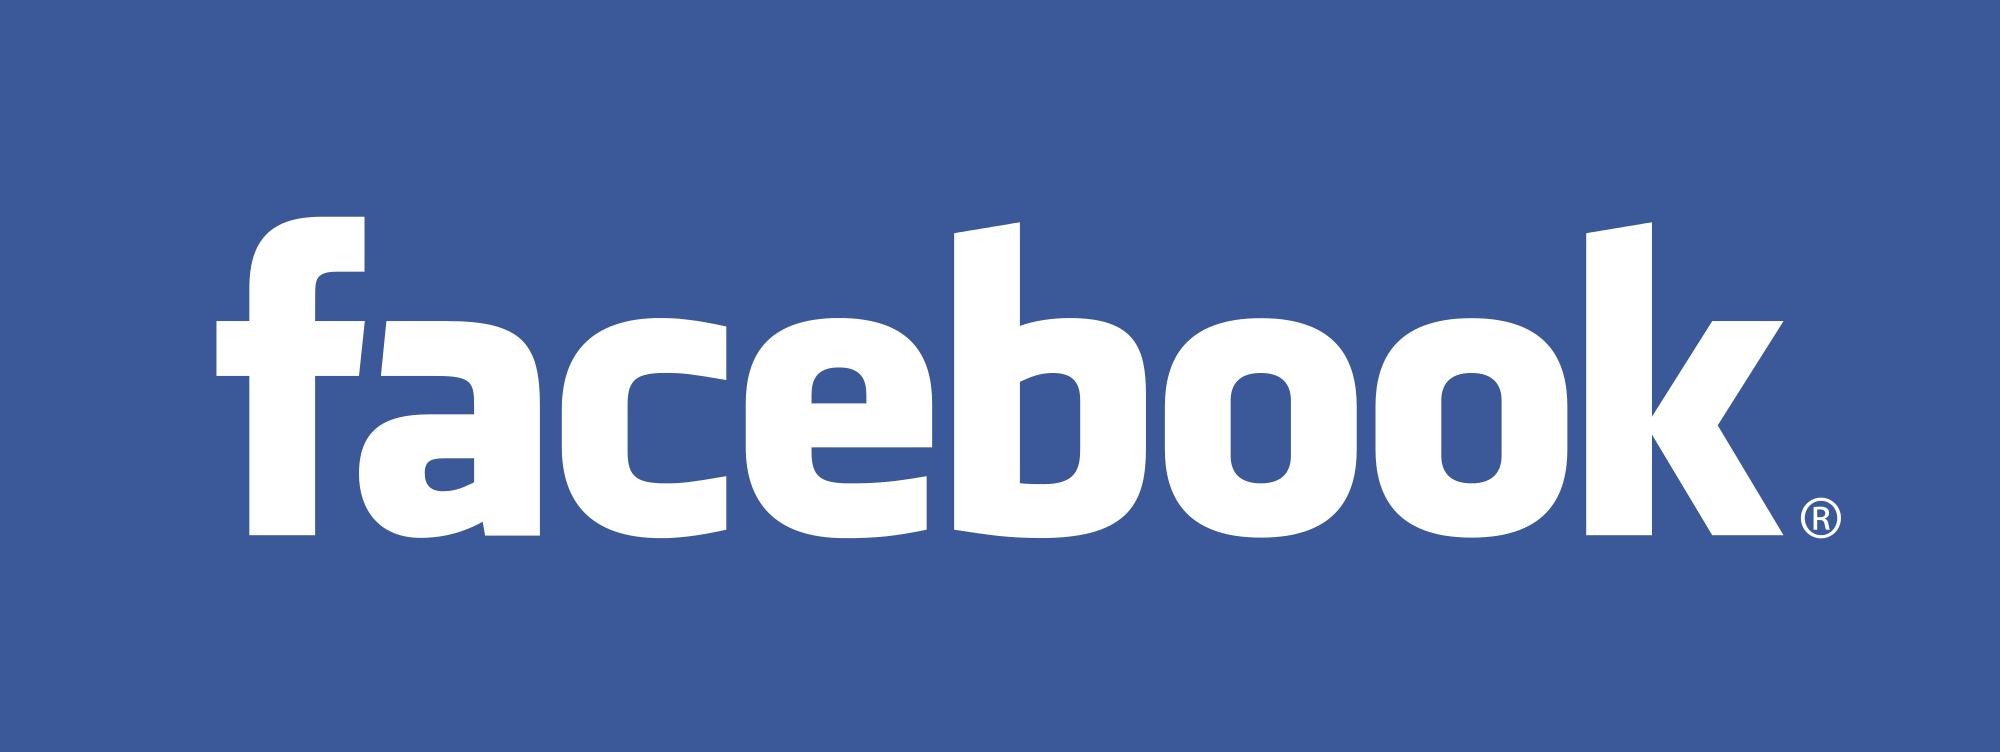 Facebok Logo - File:Facebook.svg - Wikimedia Commons